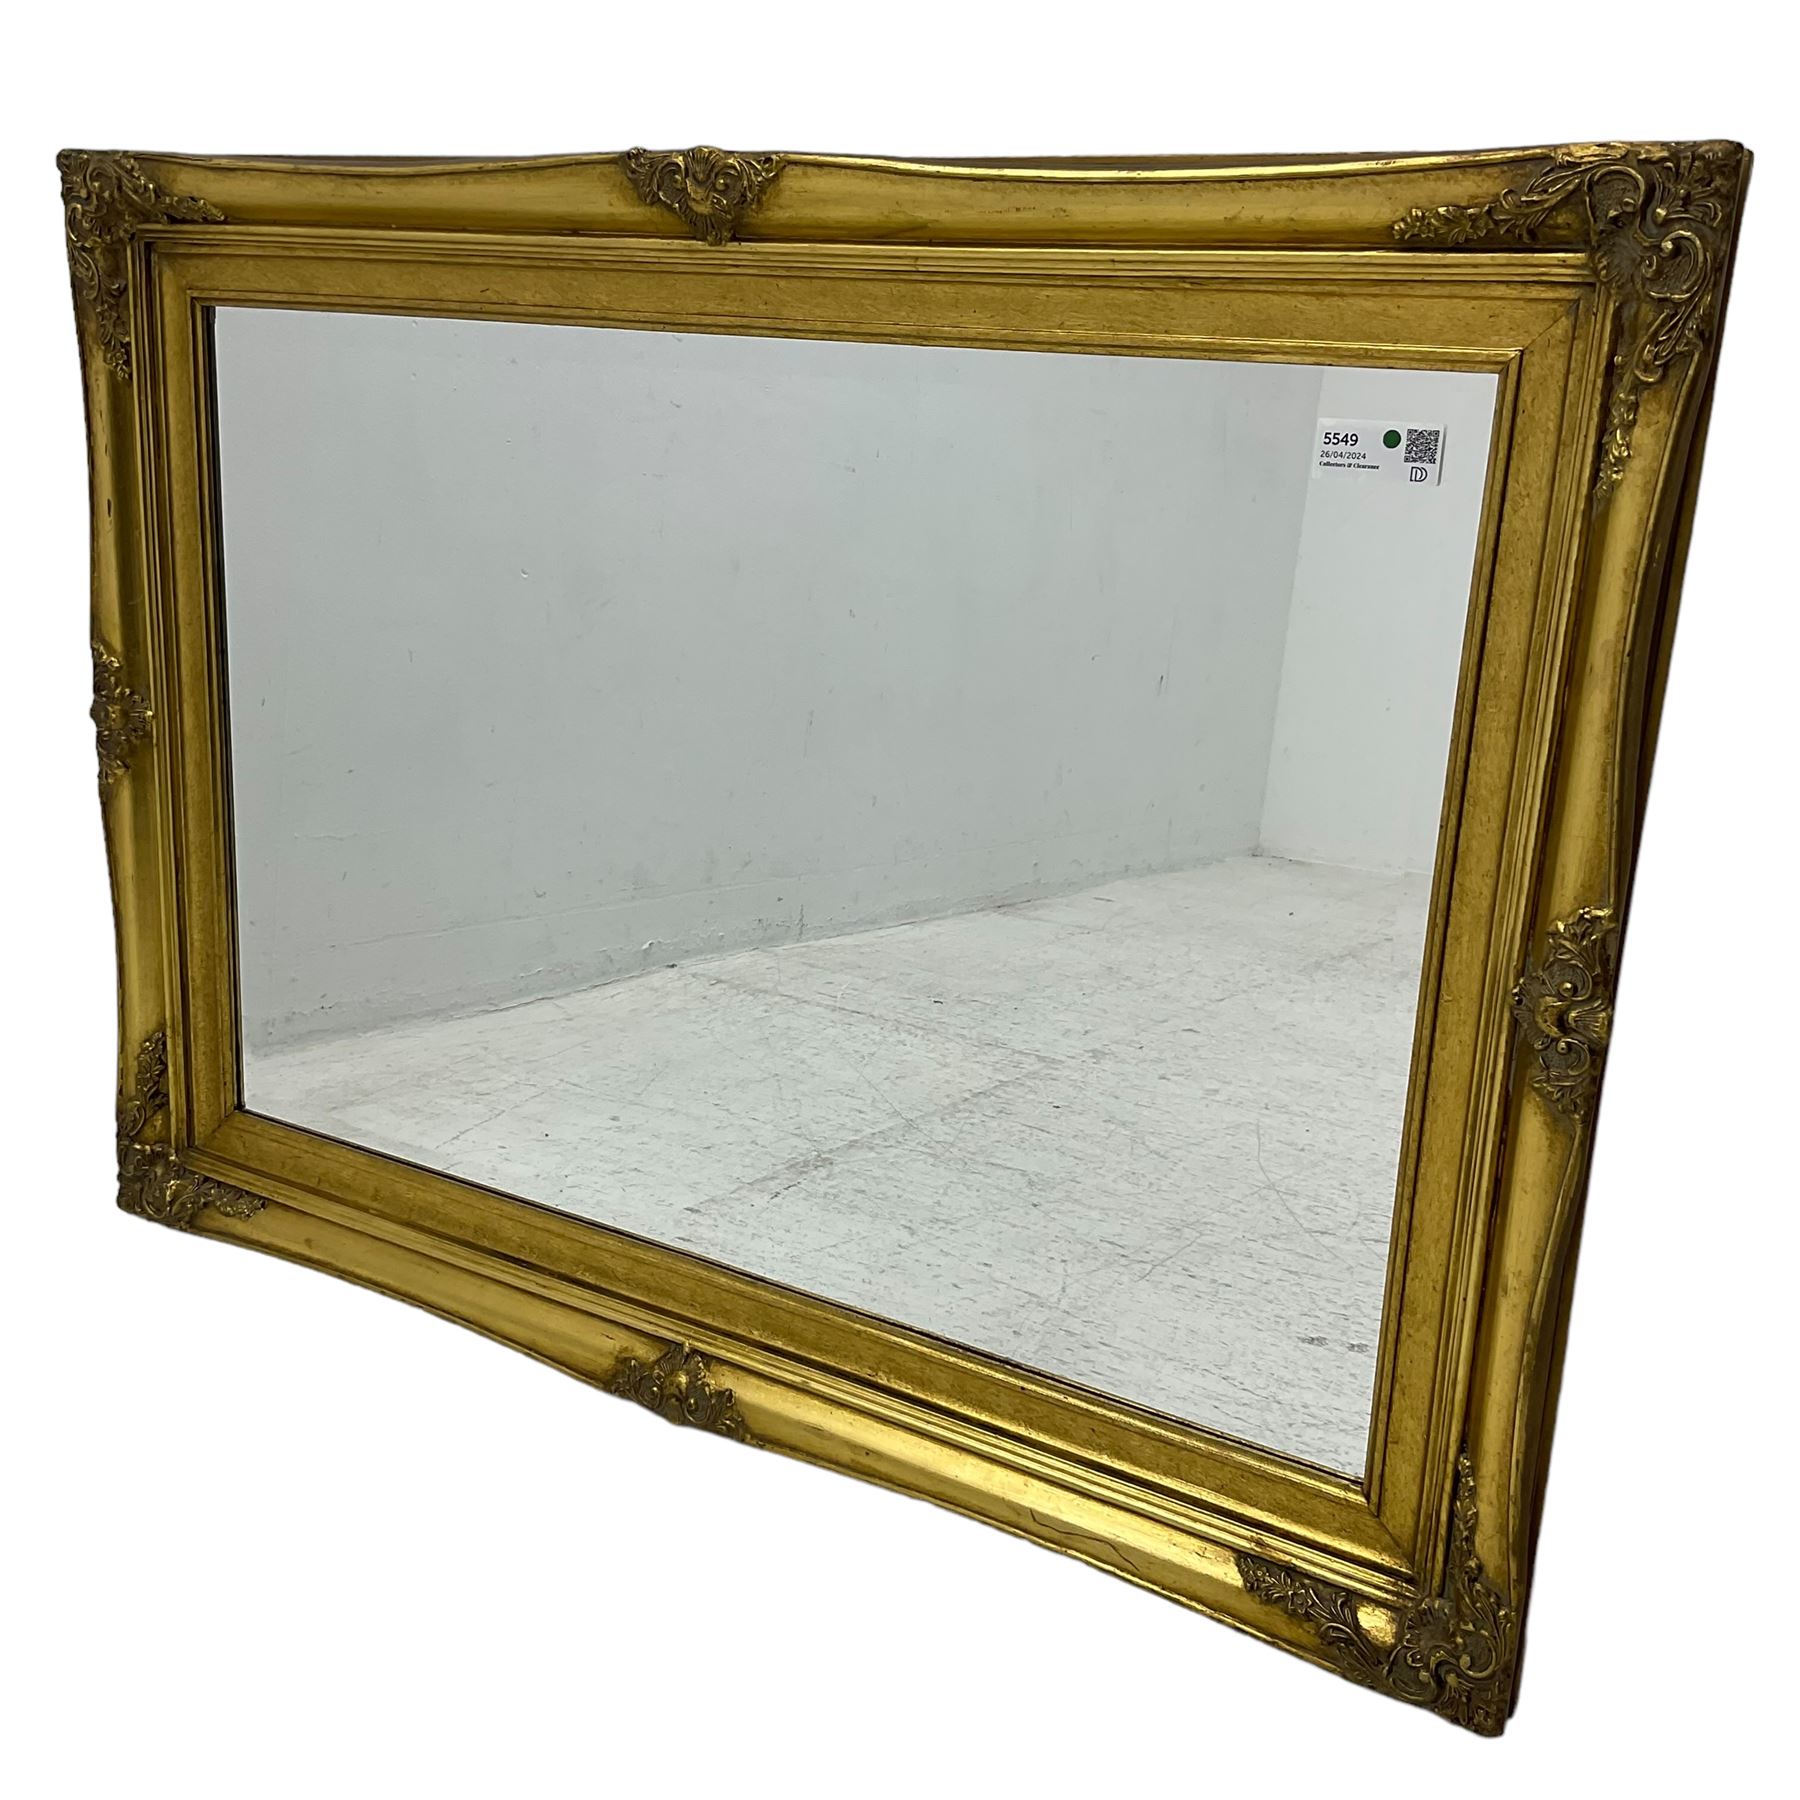 Gilt framed wall mirror - Image 2 of 5